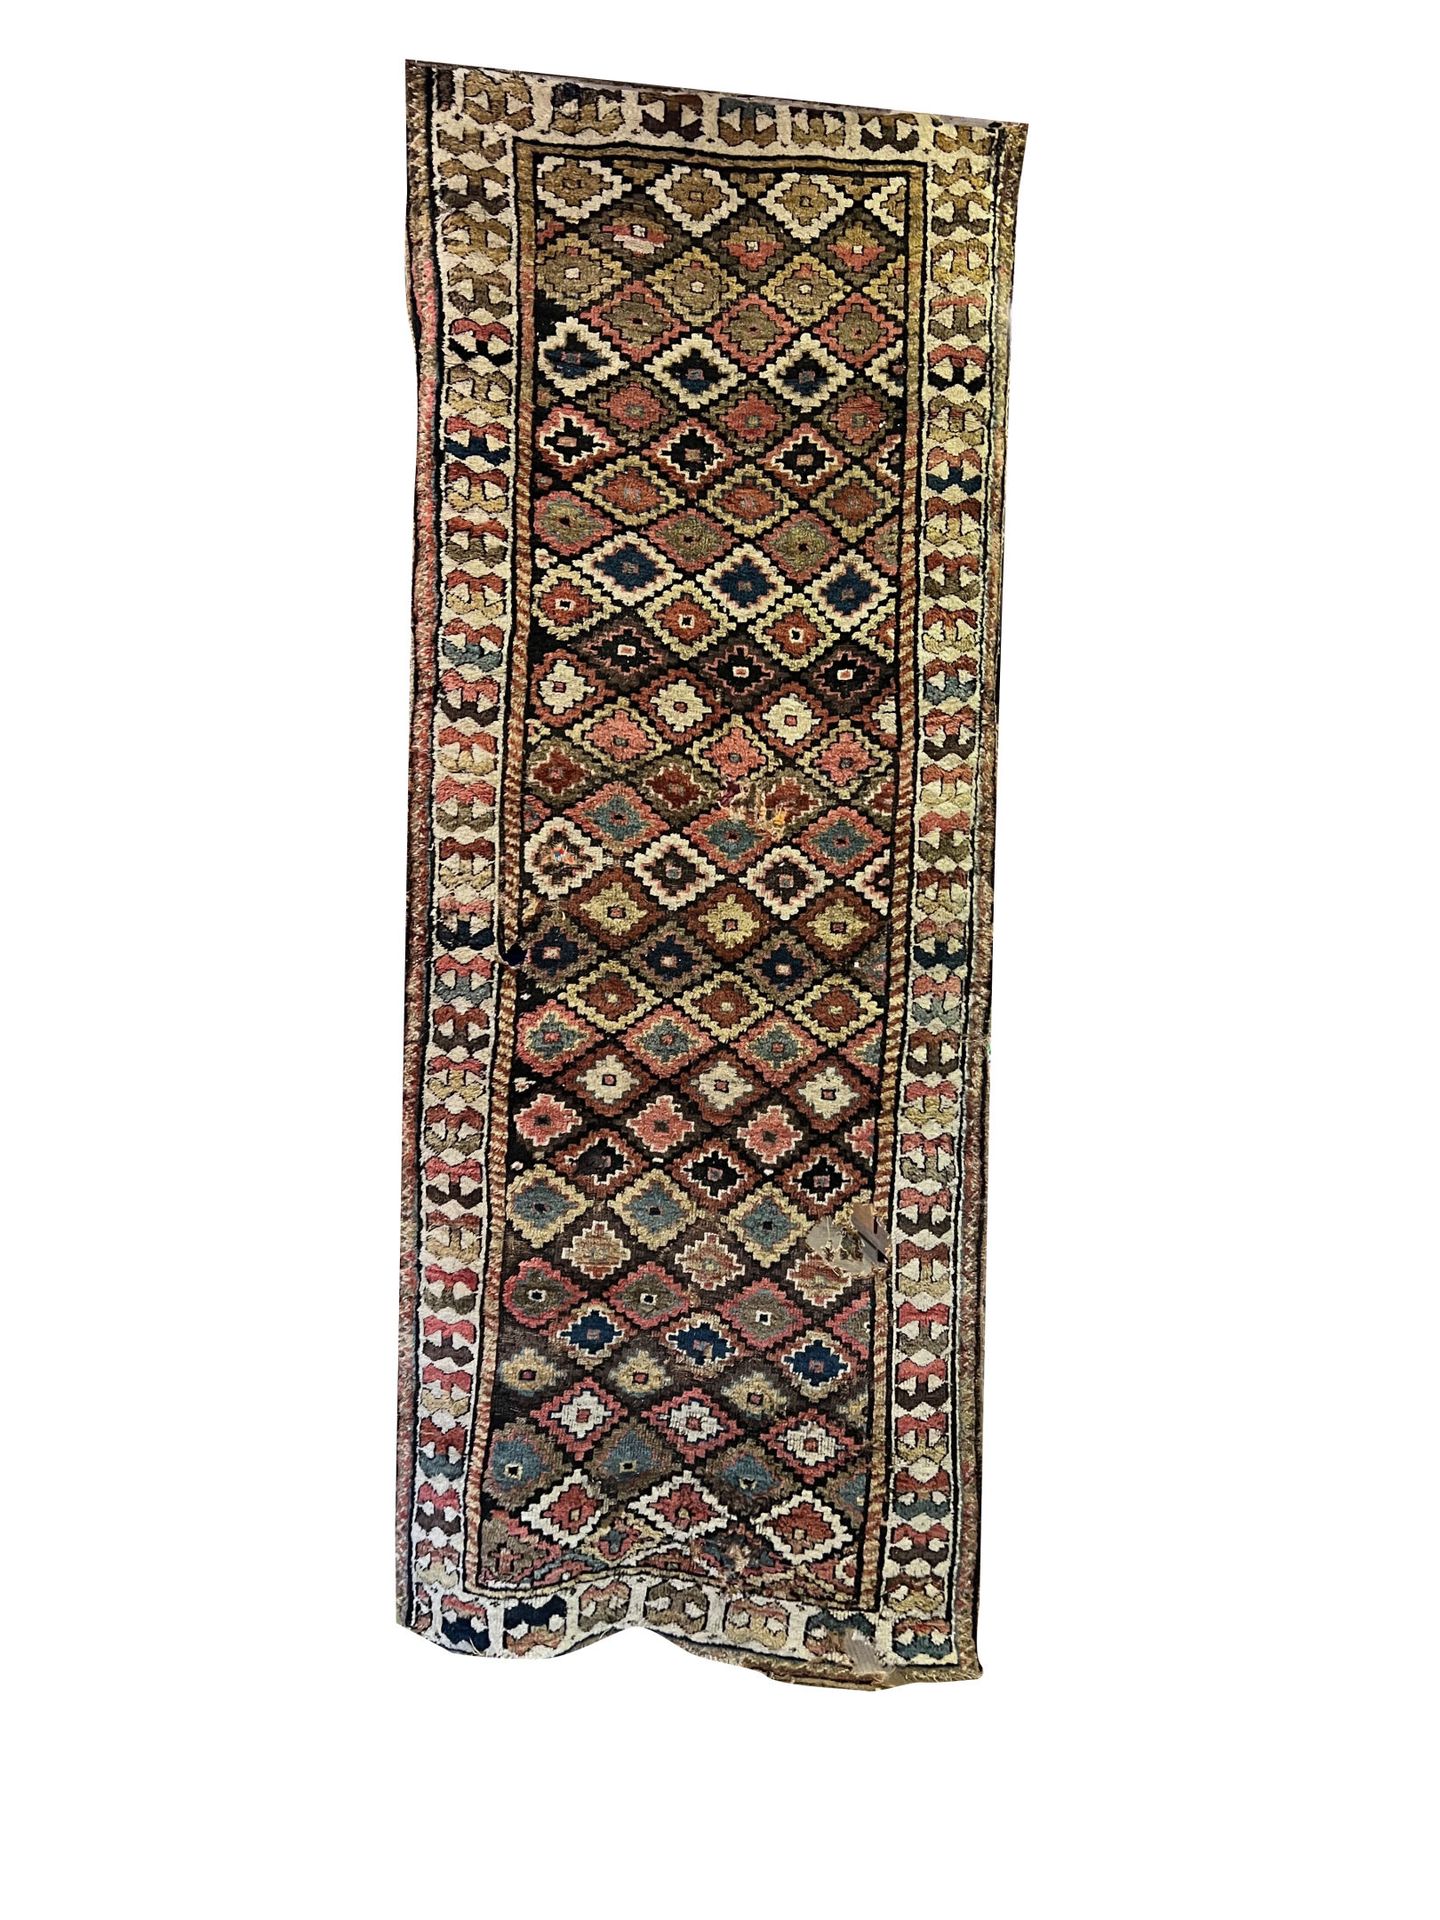 Null 东方的地毯

Melayer地毯，多色的色调。中央和边框装饰有风格化的几何元素。

使用状况，孔 - 长2.73 x 长1.17厘米